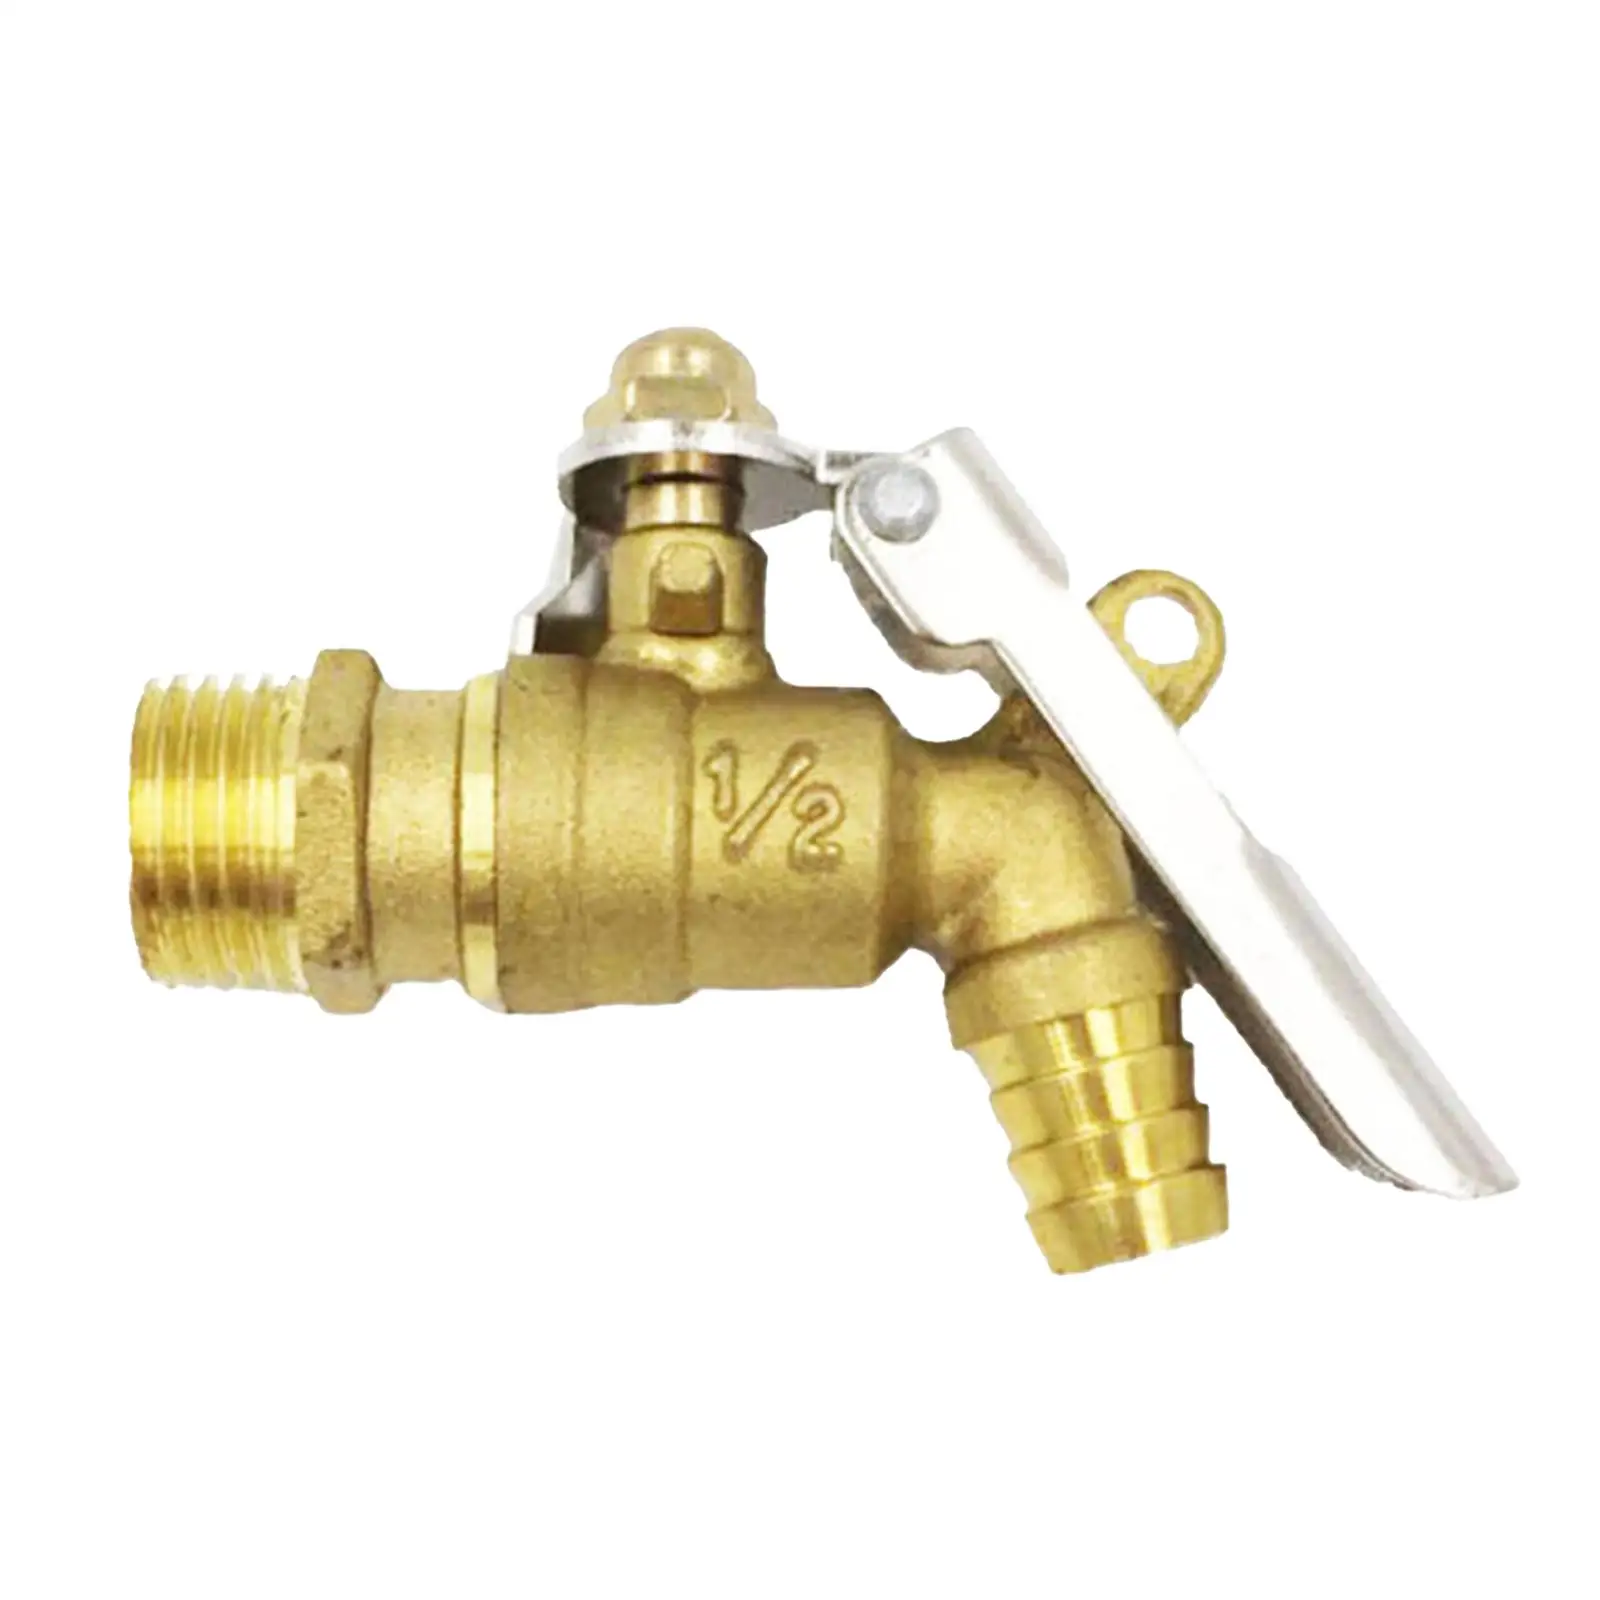 1/2 inch Lockable Brass Faucet Replacement Outdoor Brass Faucet Outdoor Water Tap for Workshop Garage Public Places Garden Home